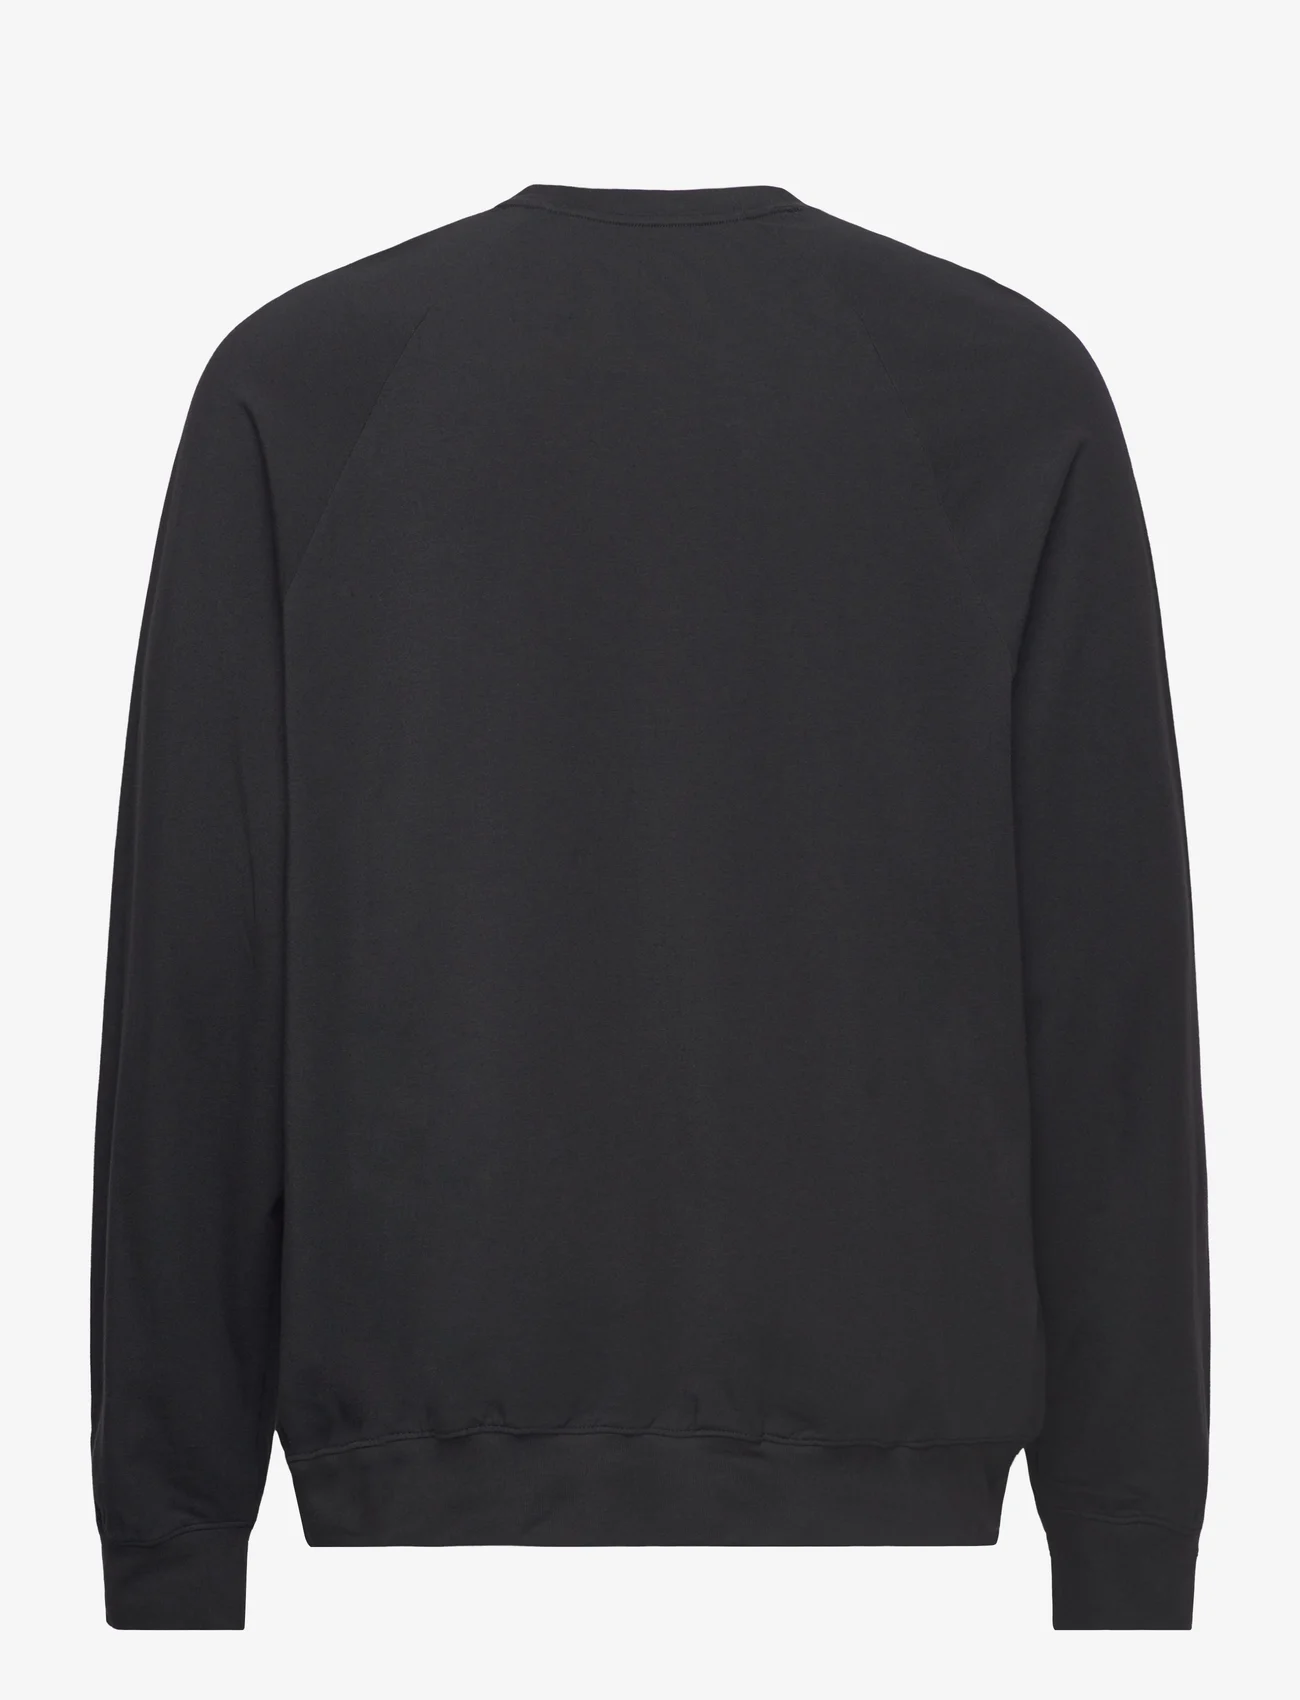 Calvin Klein - L/S SWEATSHIRT - truien en hoodies - black - 1